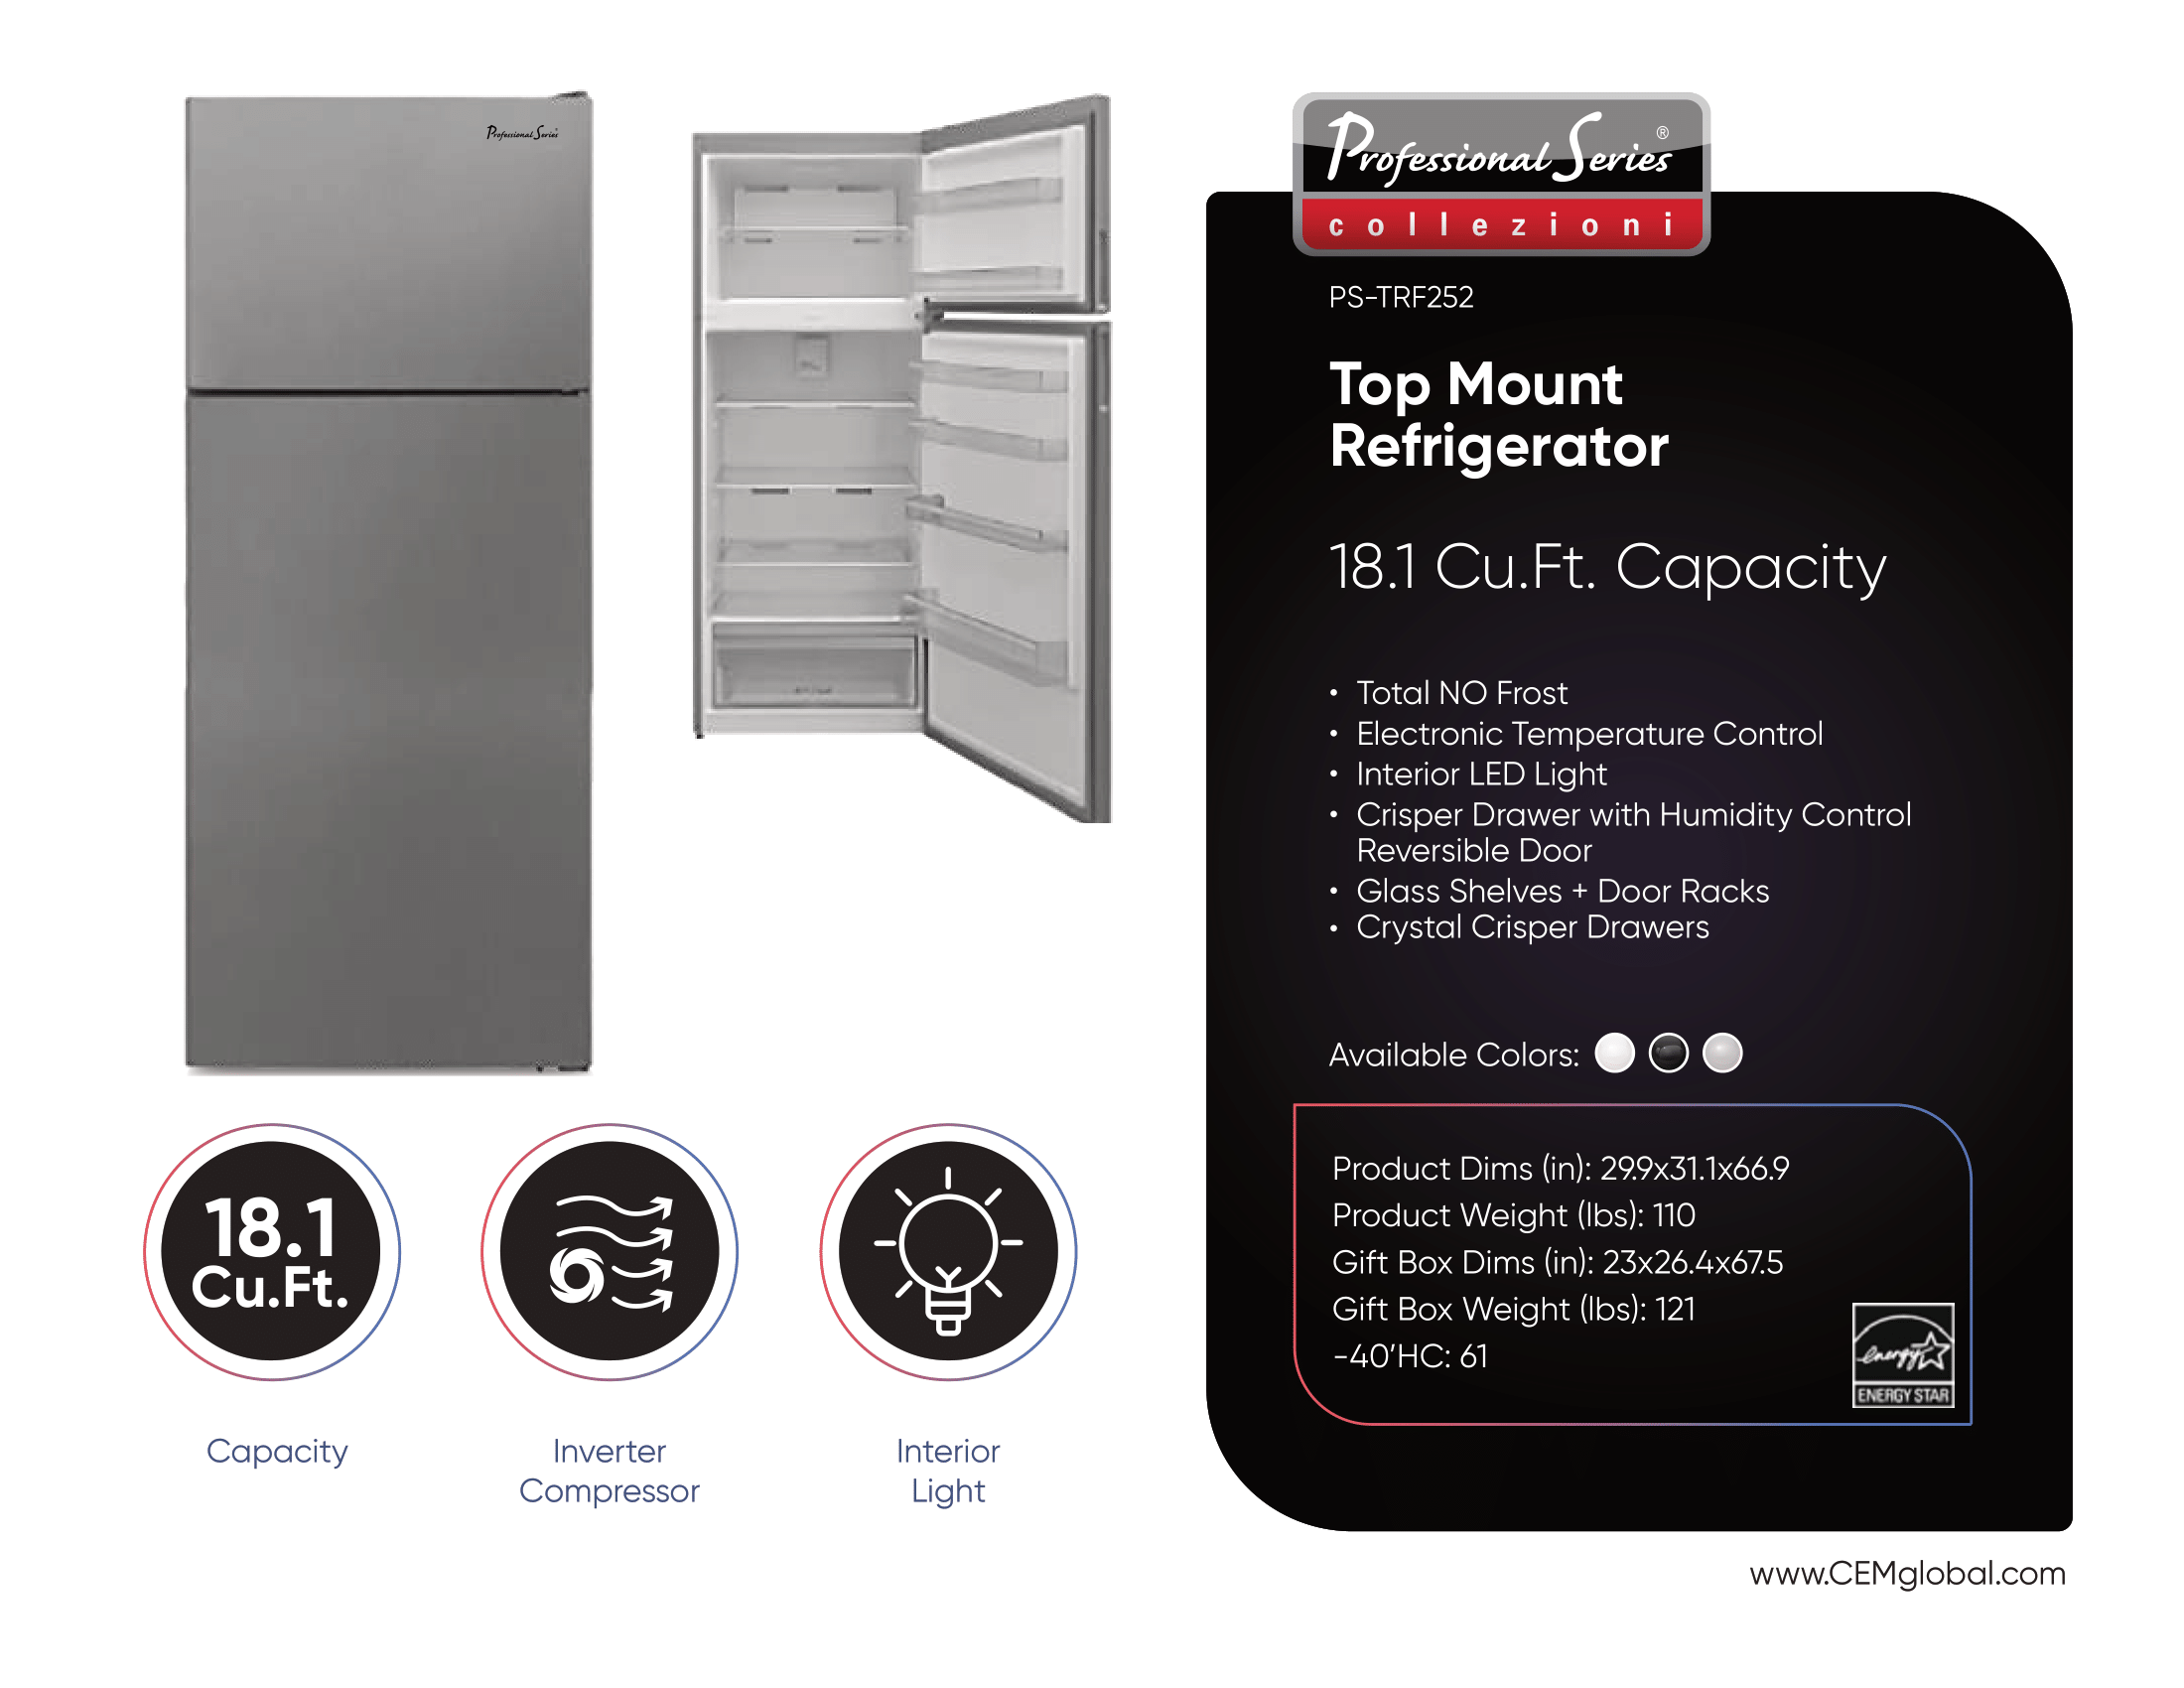 Top Mount Refrigerator 18.1 Cu.Ft.